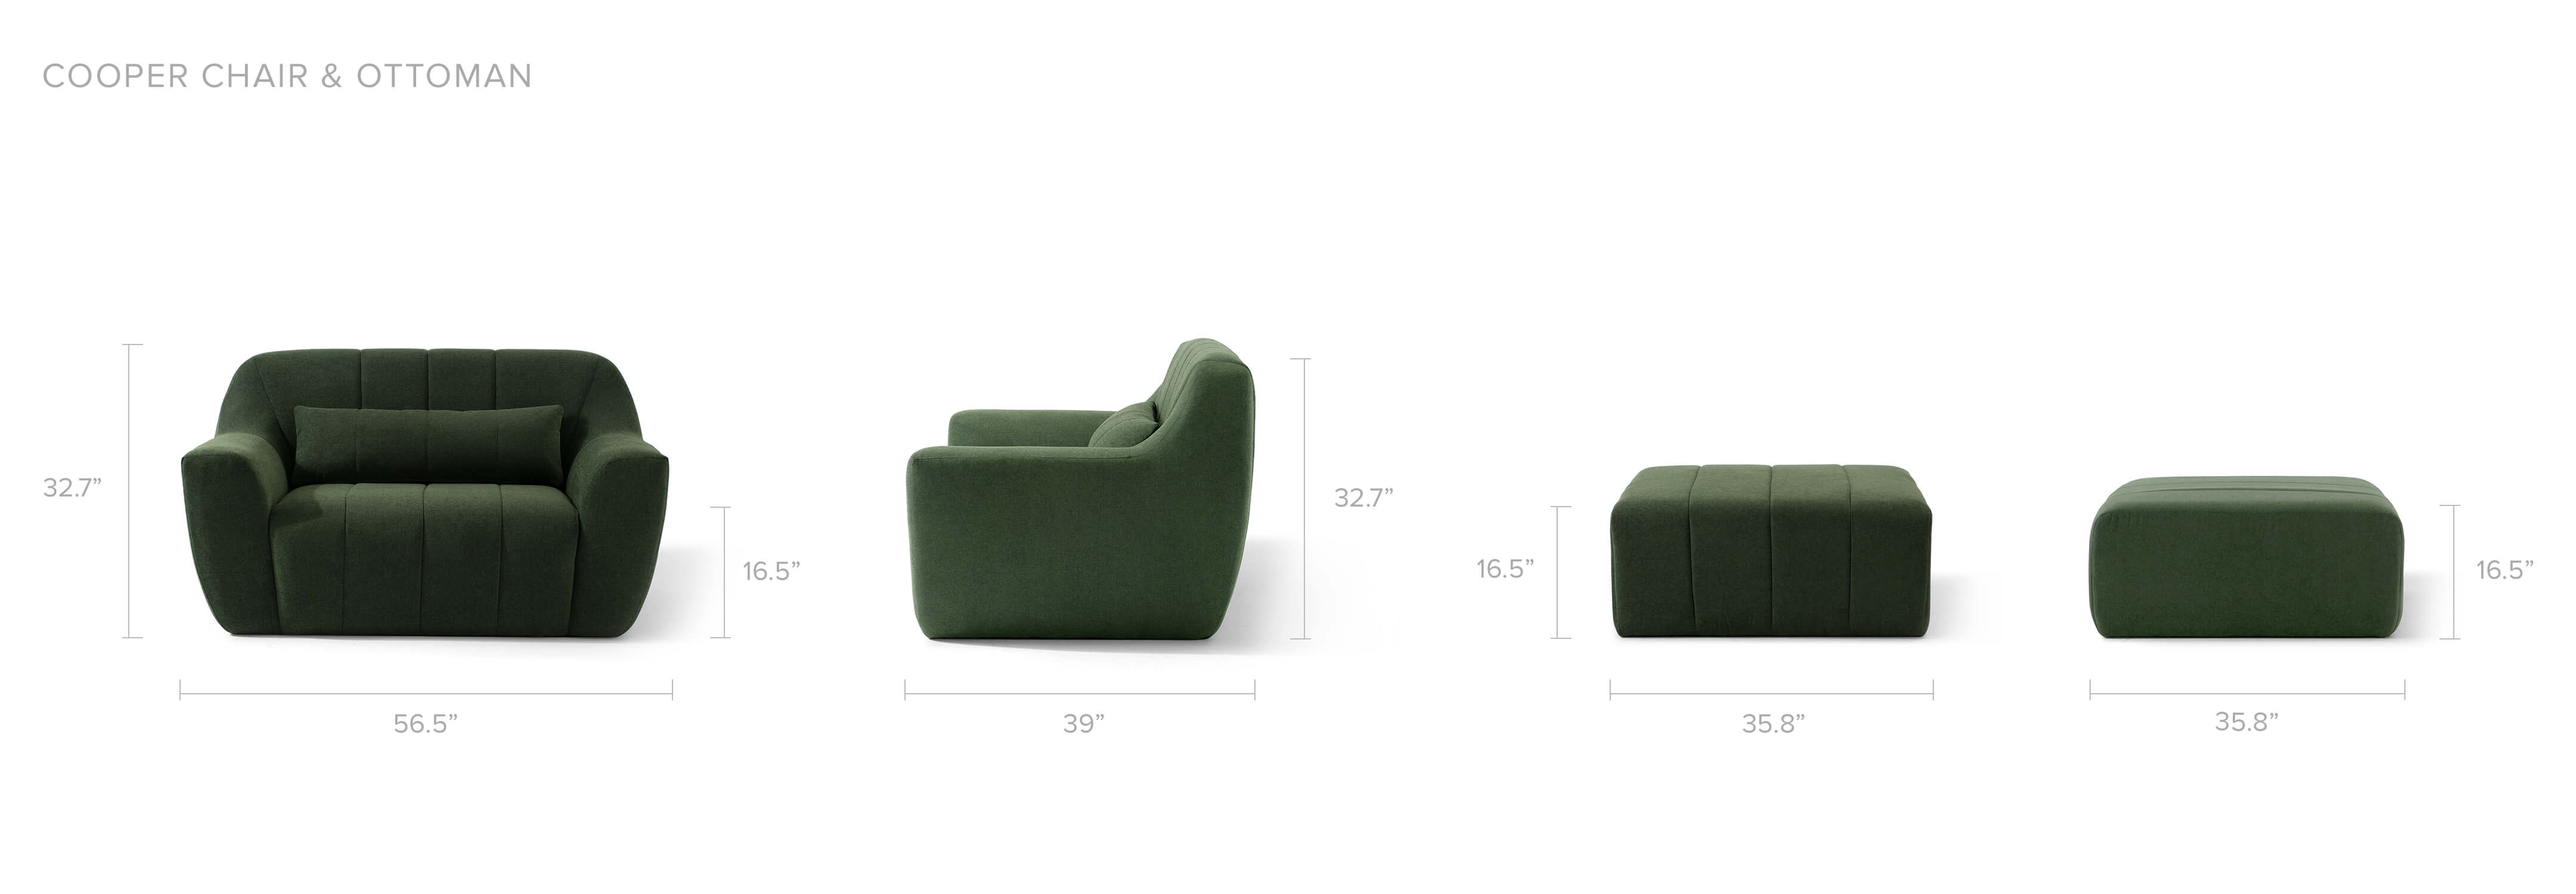 Chair Dimension Width 56.5" x Depth 39" x Height 32.7", Ottoman Dimension Seat Width 35.8" x Depth 35.8" x Height 16.5"